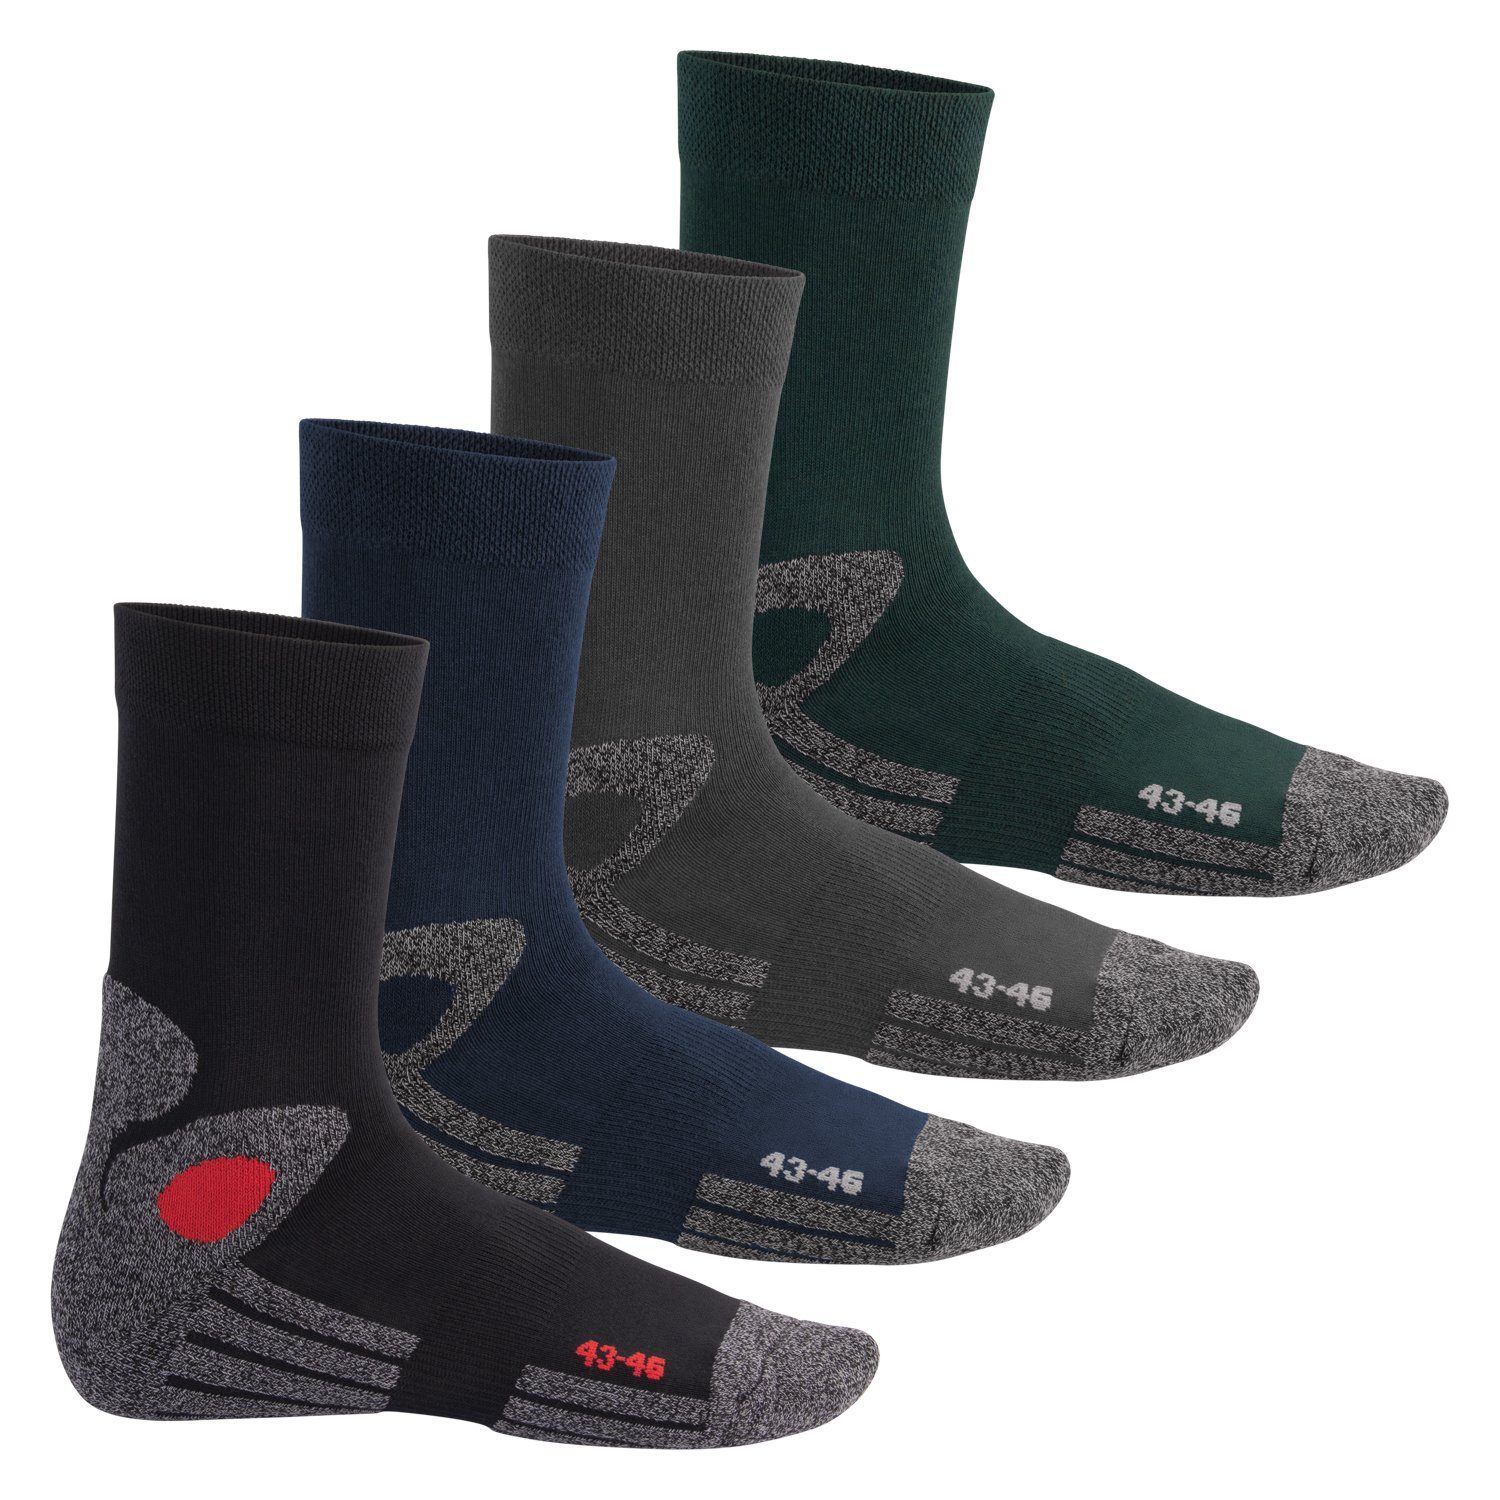 celodoro Arbeitssocken Trekking-Socken für Damen & Herren (4 Paar) mit Frotteesohle All Colours